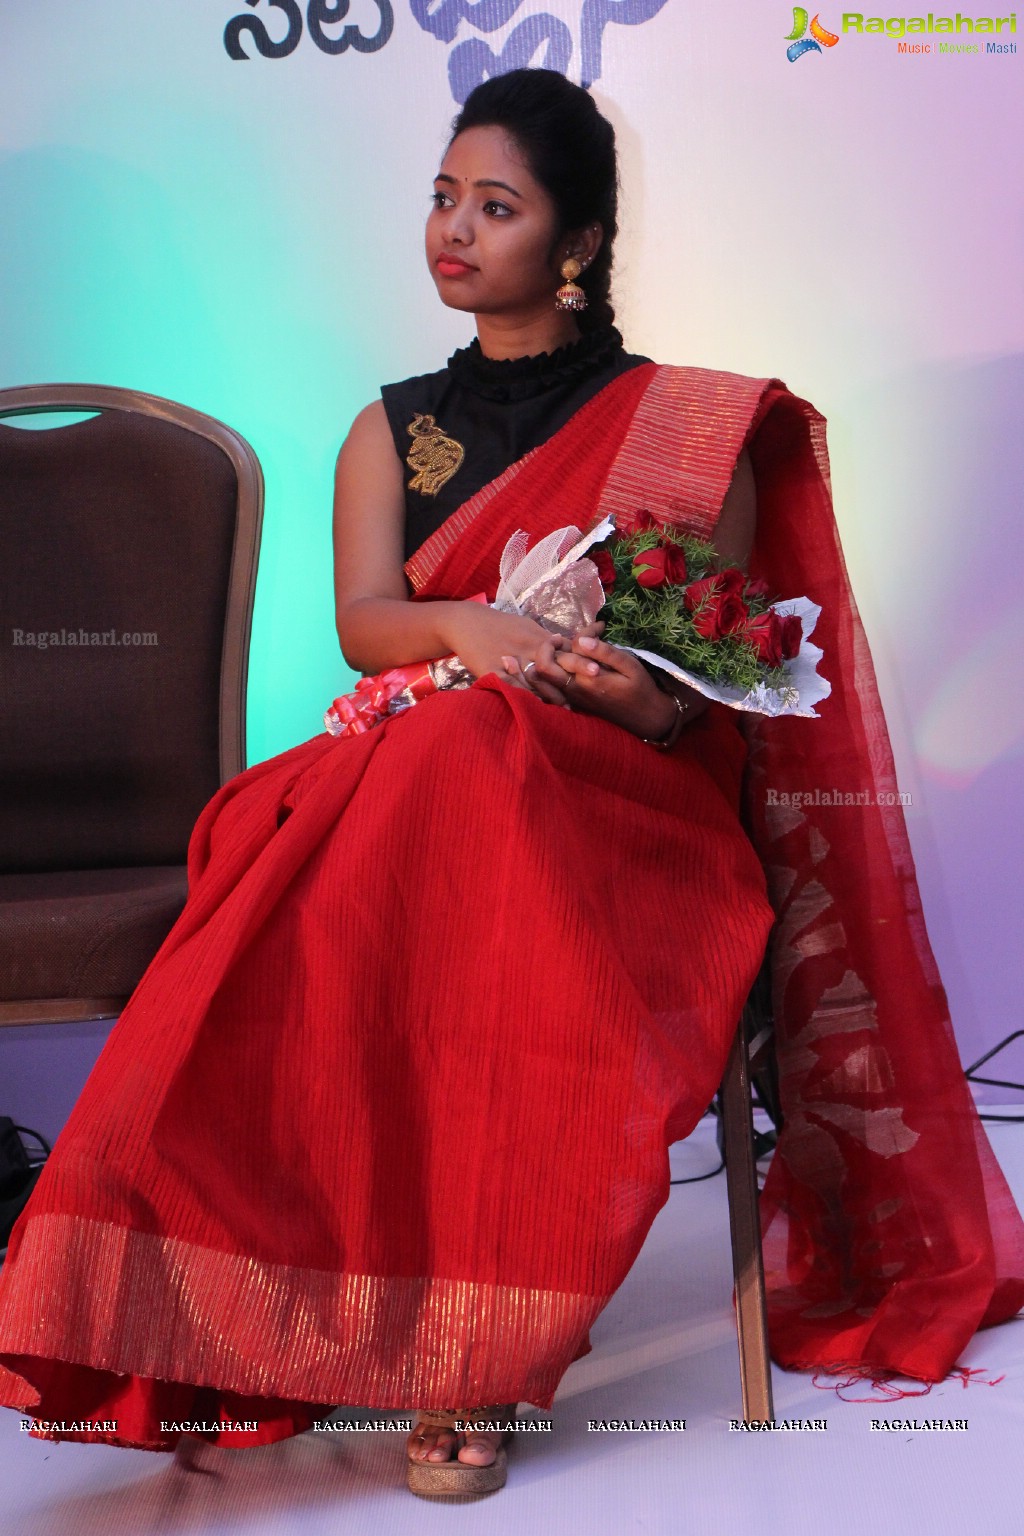 Sakshi Women's Day Celebrations 2015